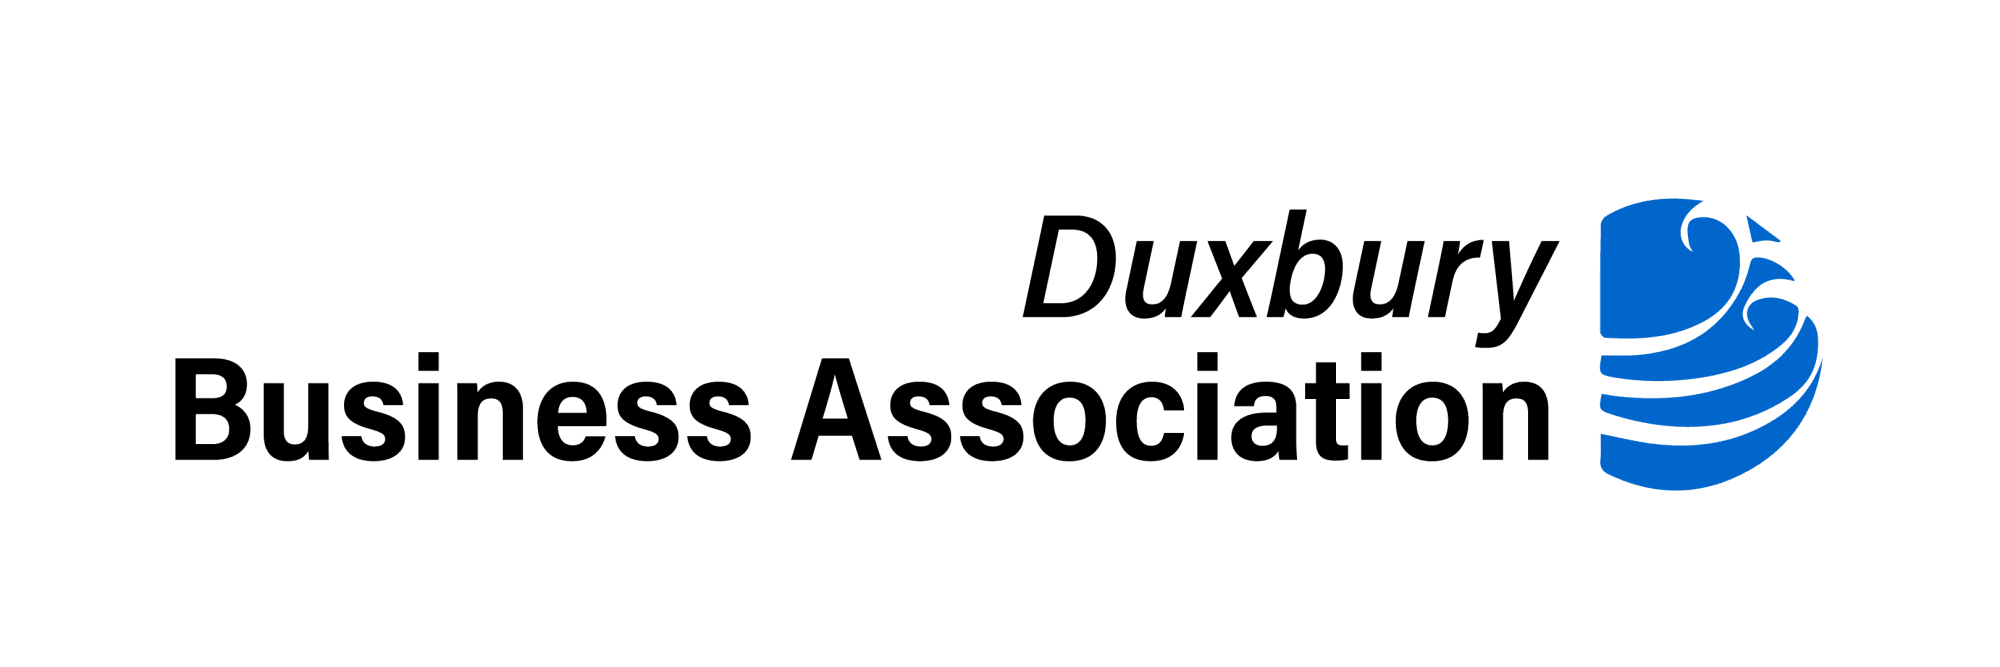 Duxbury Business Association